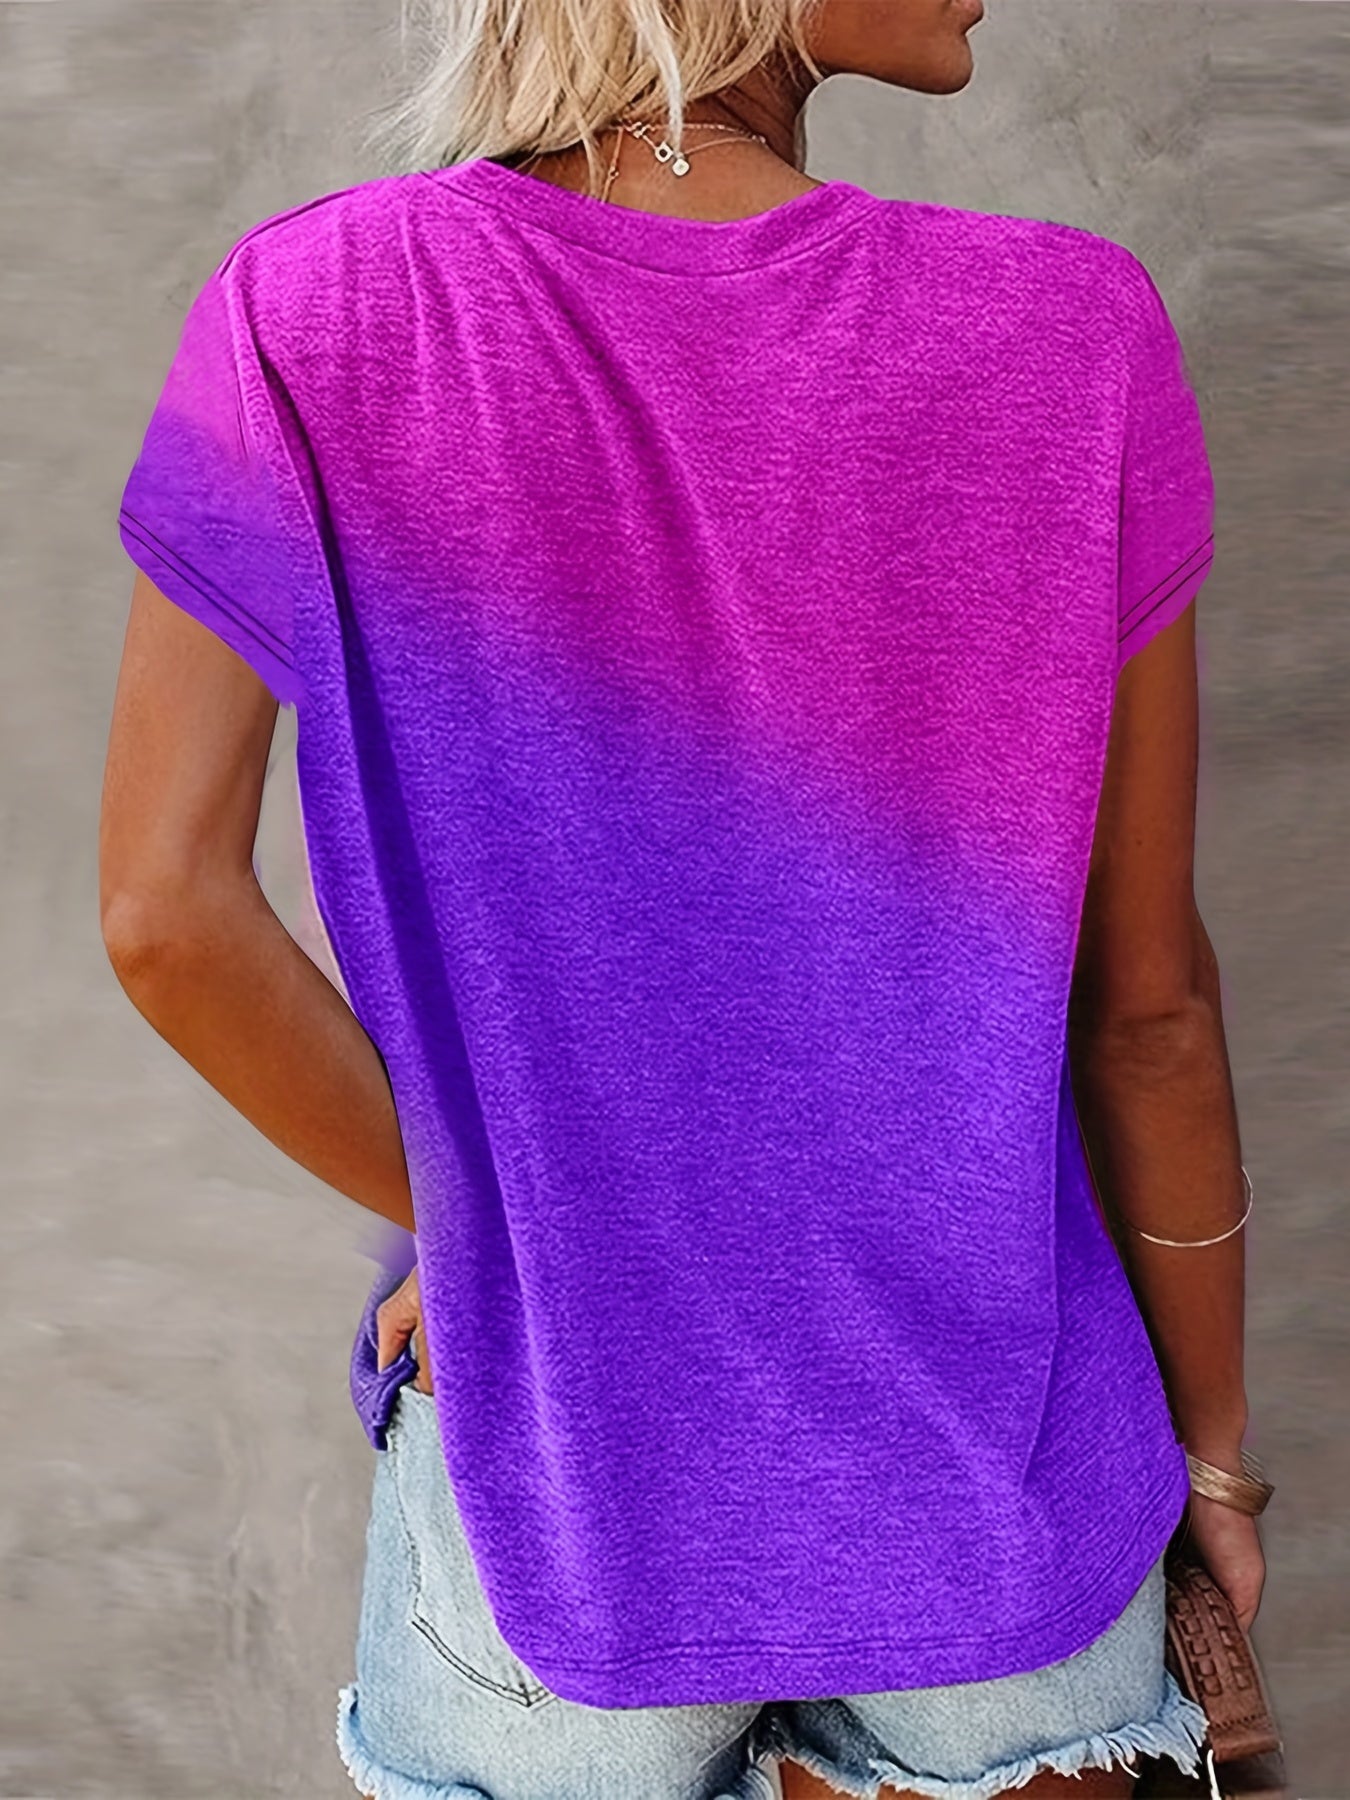 Vzyzv Gradient Color Pocket T-Shirt, Casual Crew Neck Short Sleeve T-Shirt For Spring & Summer, Women's Clothing